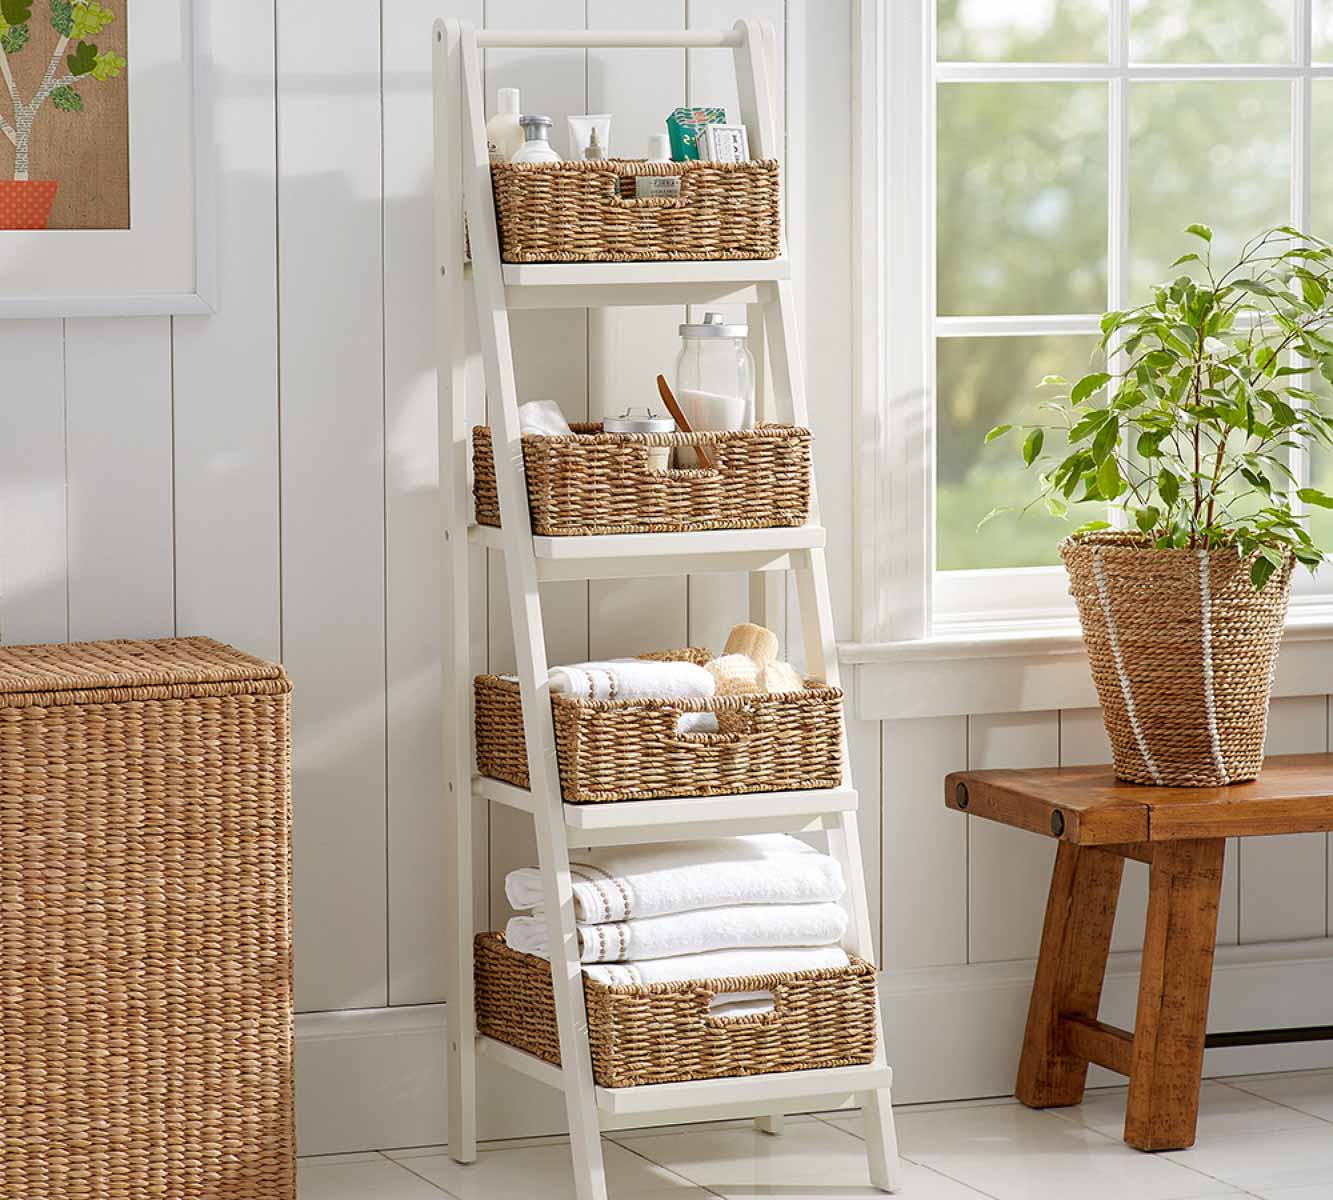 Decorative ladder with storage baskets sitting on shelves